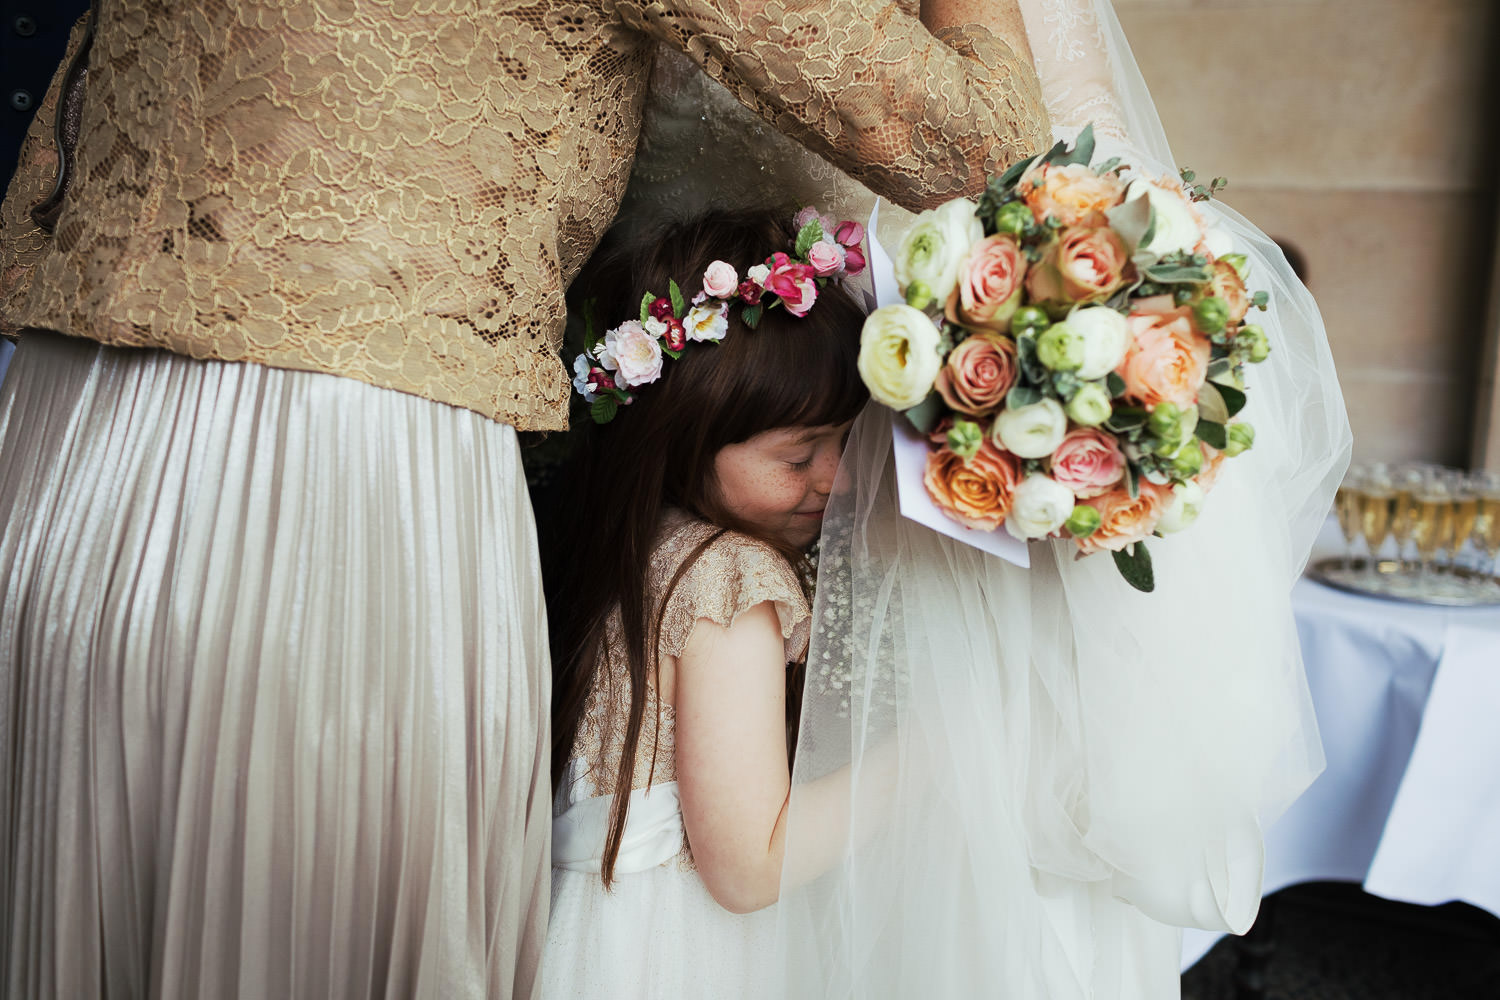 Flower girl hugging bride at London wedding